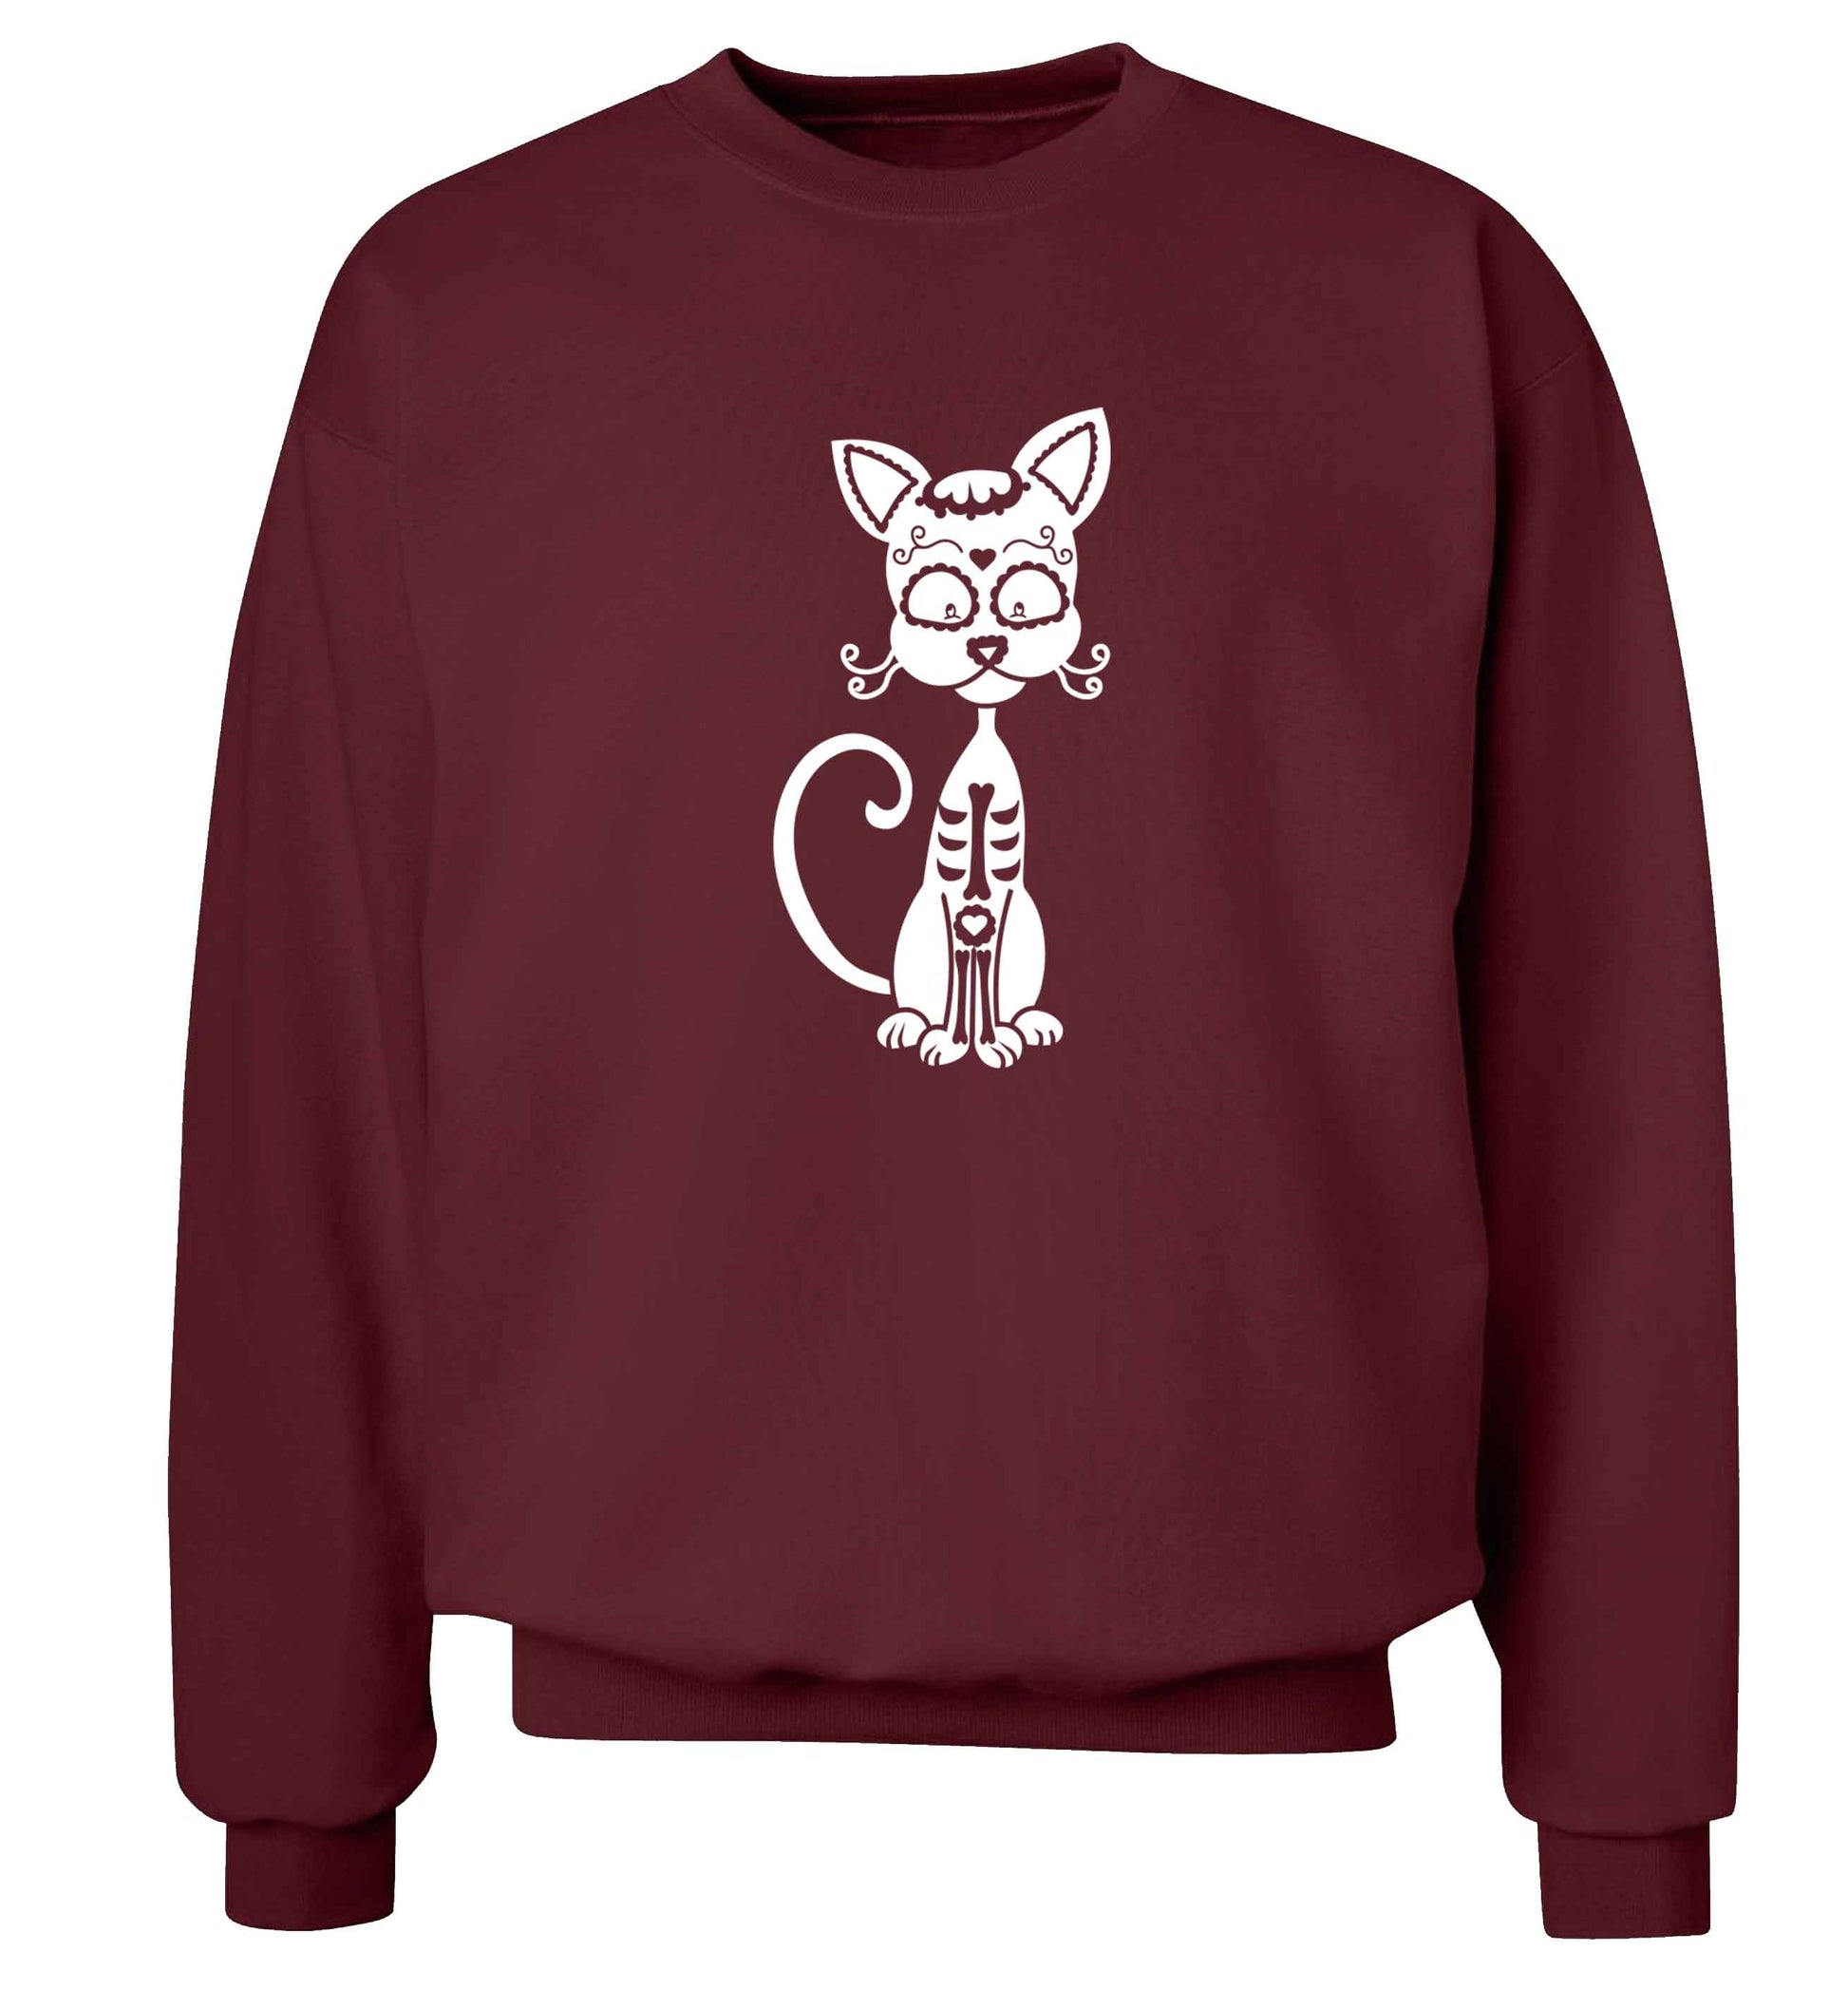 Cat sugar skull adult's unisex maroon sweater 2XL